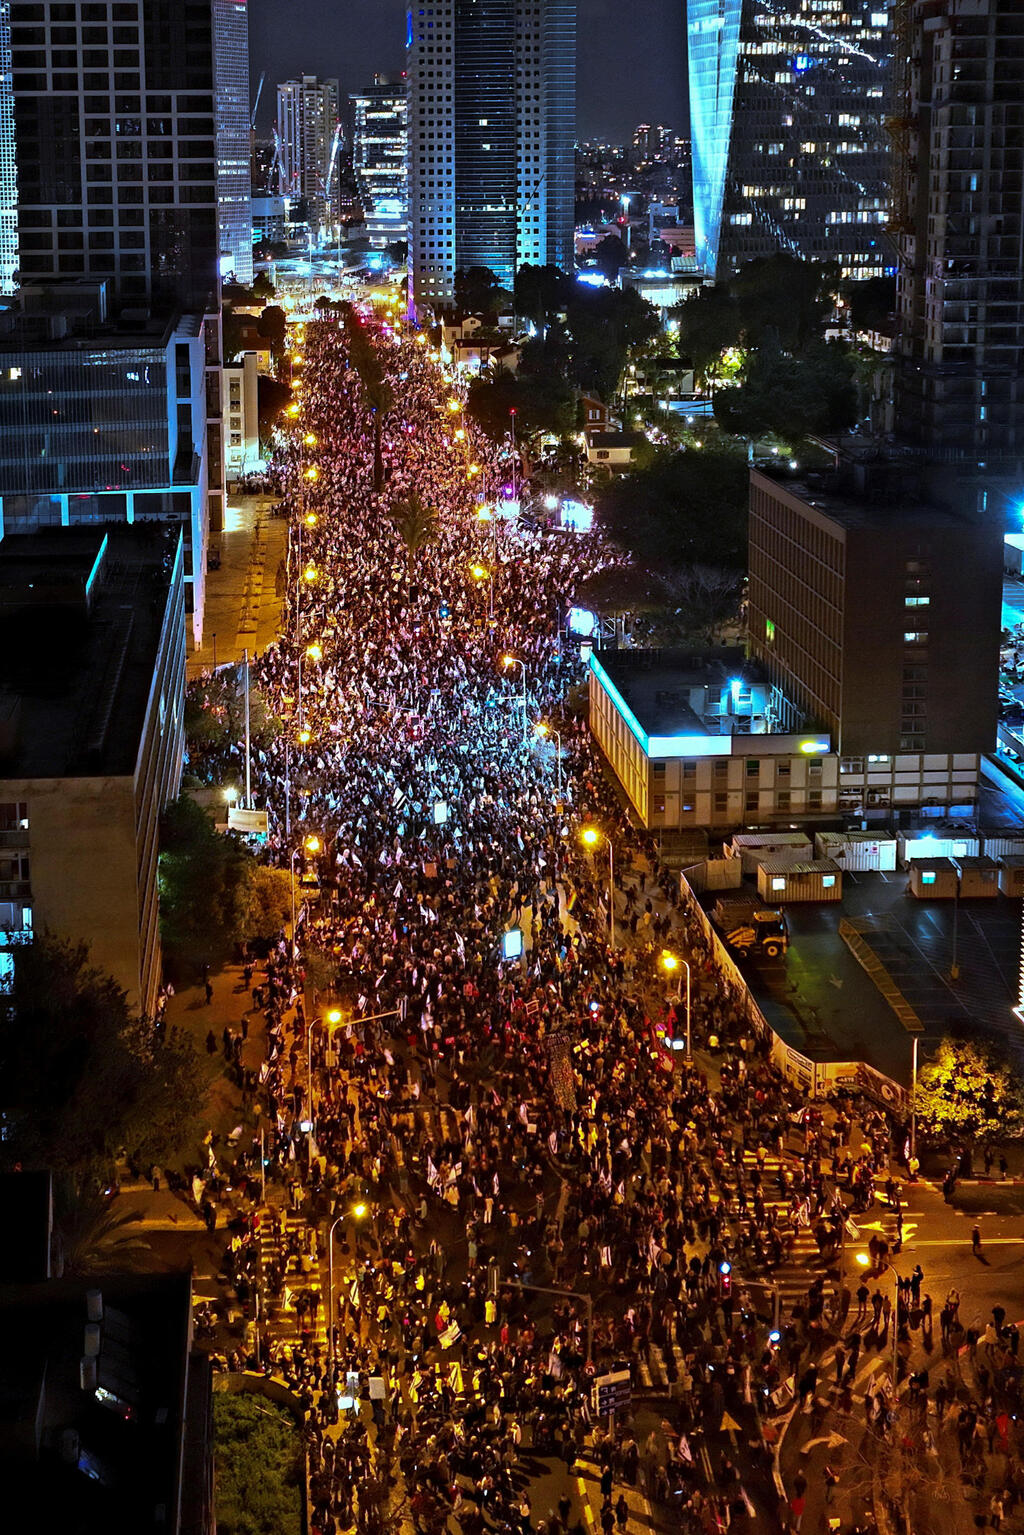 Demonstrators protesting government proposed legislation in Tel Aviv on Saturday 